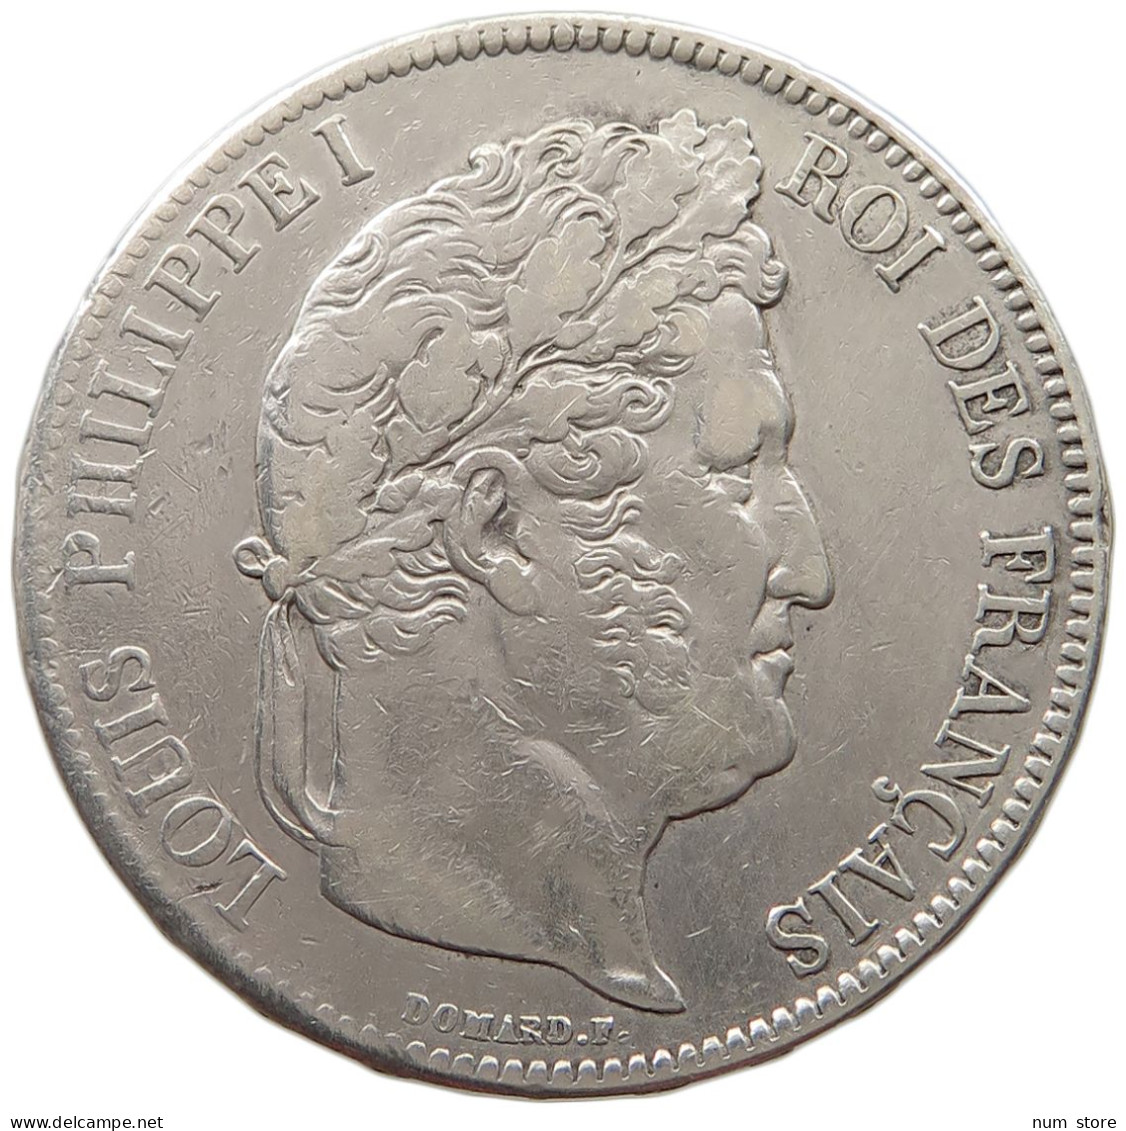 FRANCE 5 FRANCS 1838 A LOUIS PHILIPPE I. (1830-1848) #a001 0107 - 5 Francs